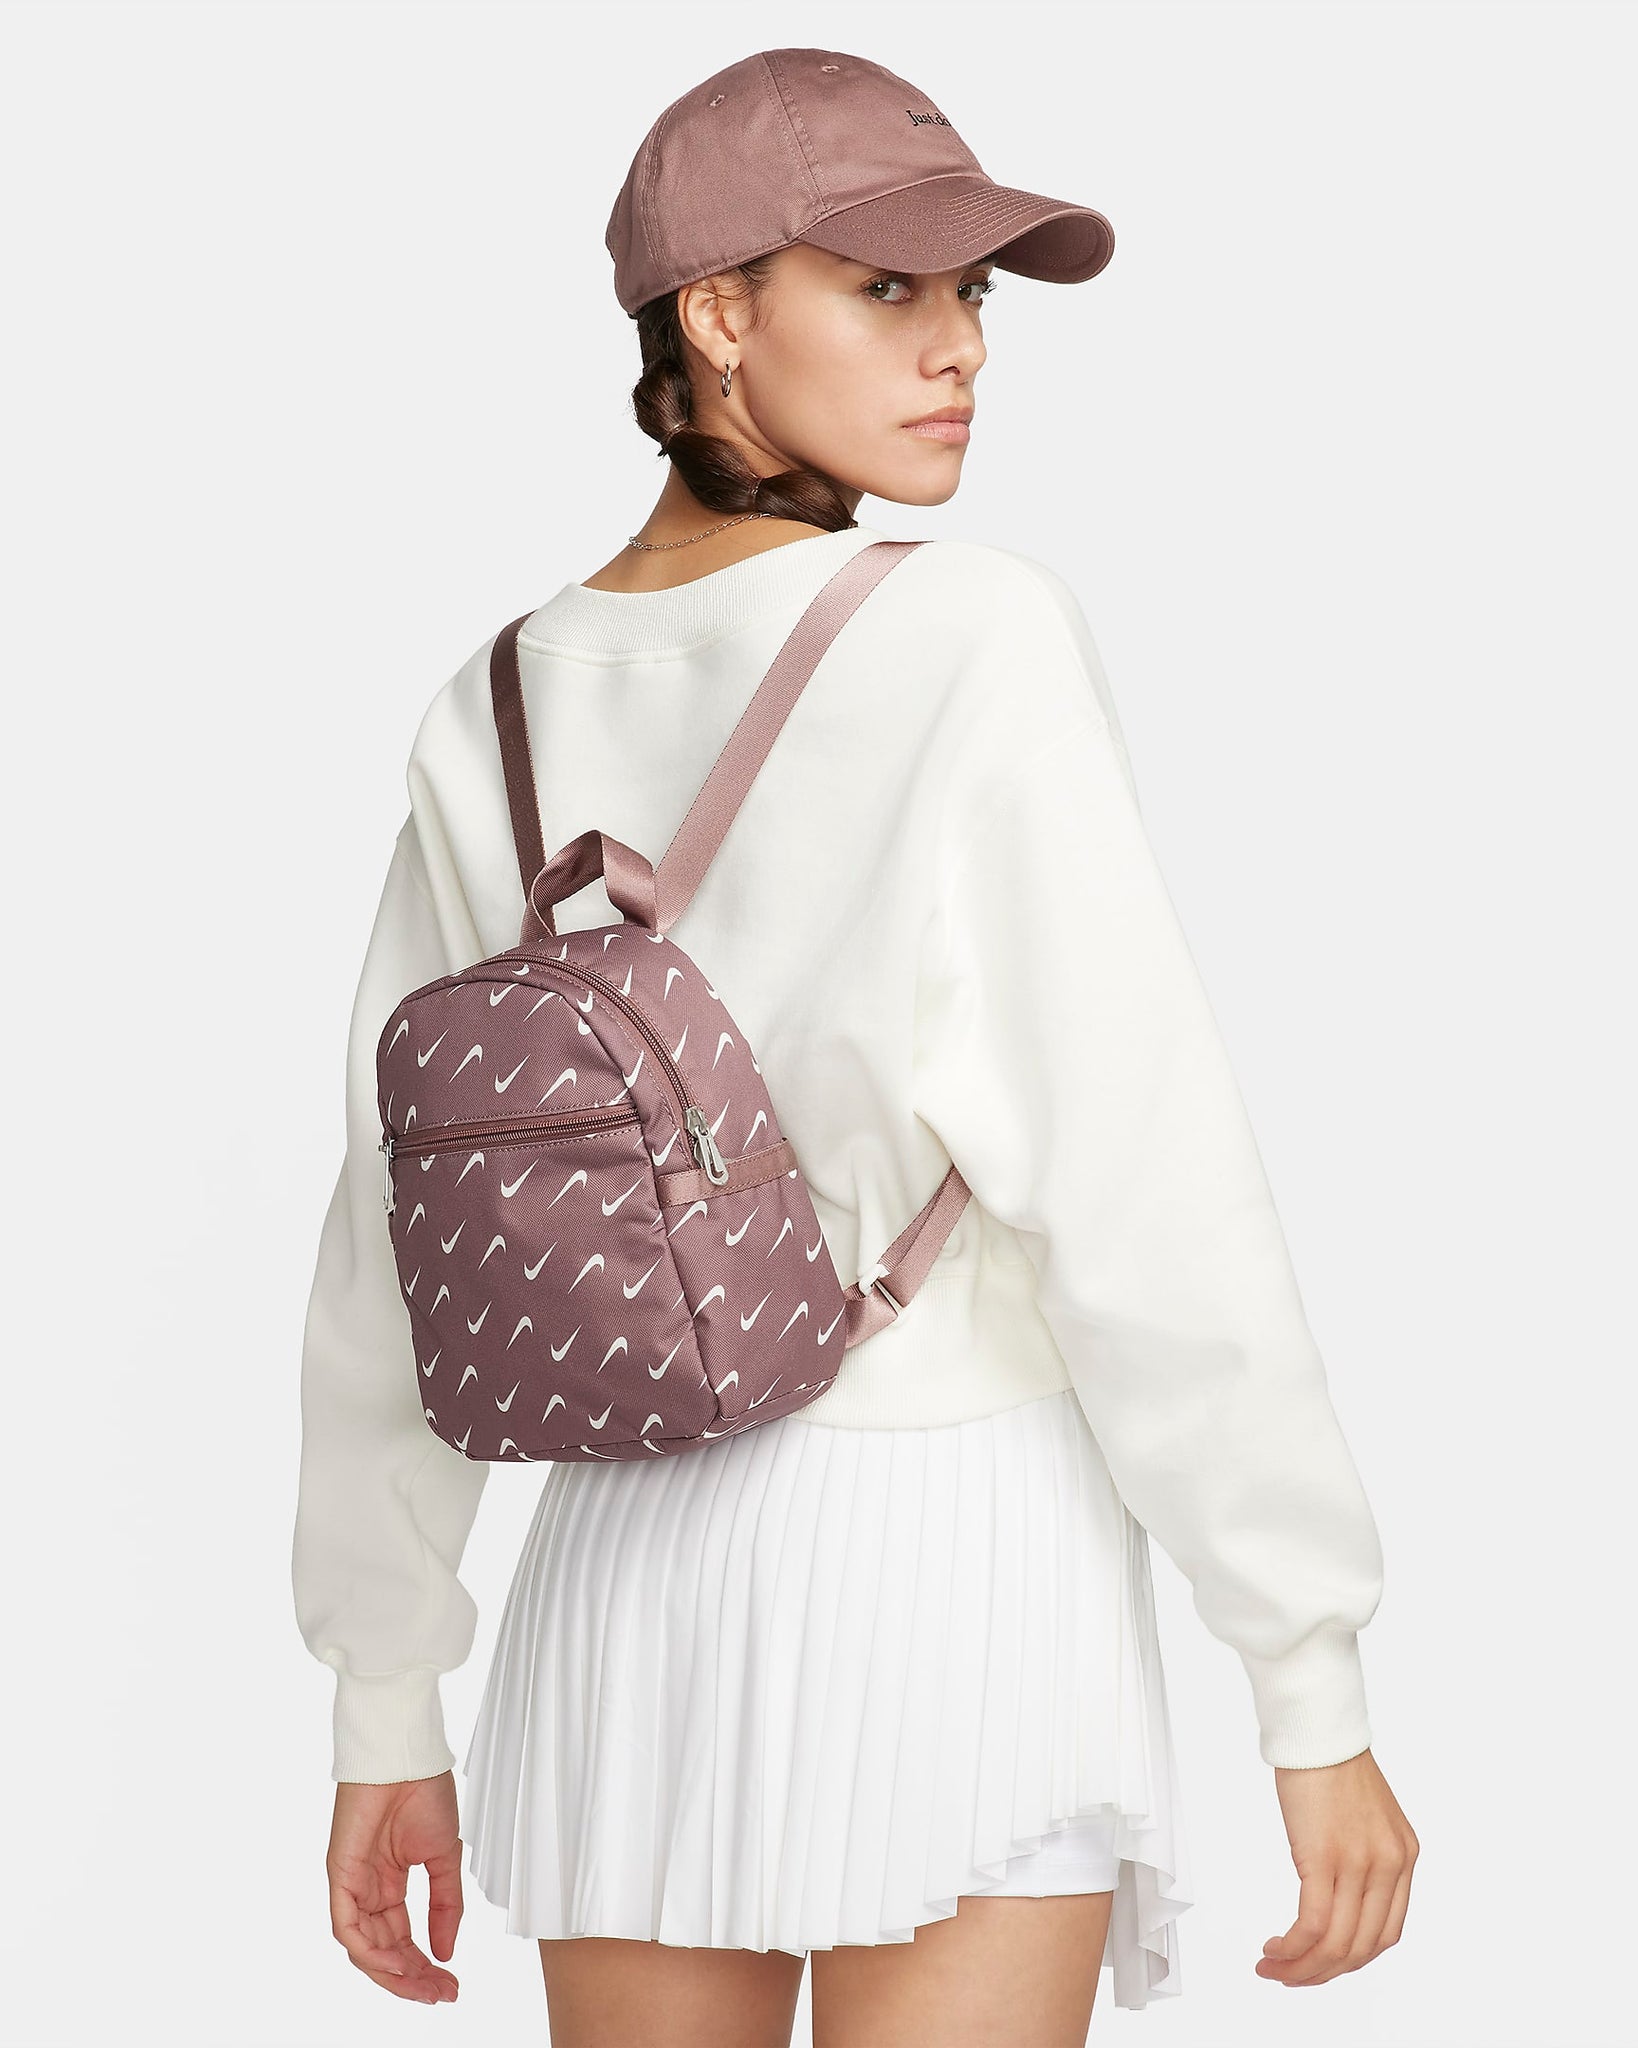 Nike Sportswear Futura 365 Mini backpack for women (6 liters)